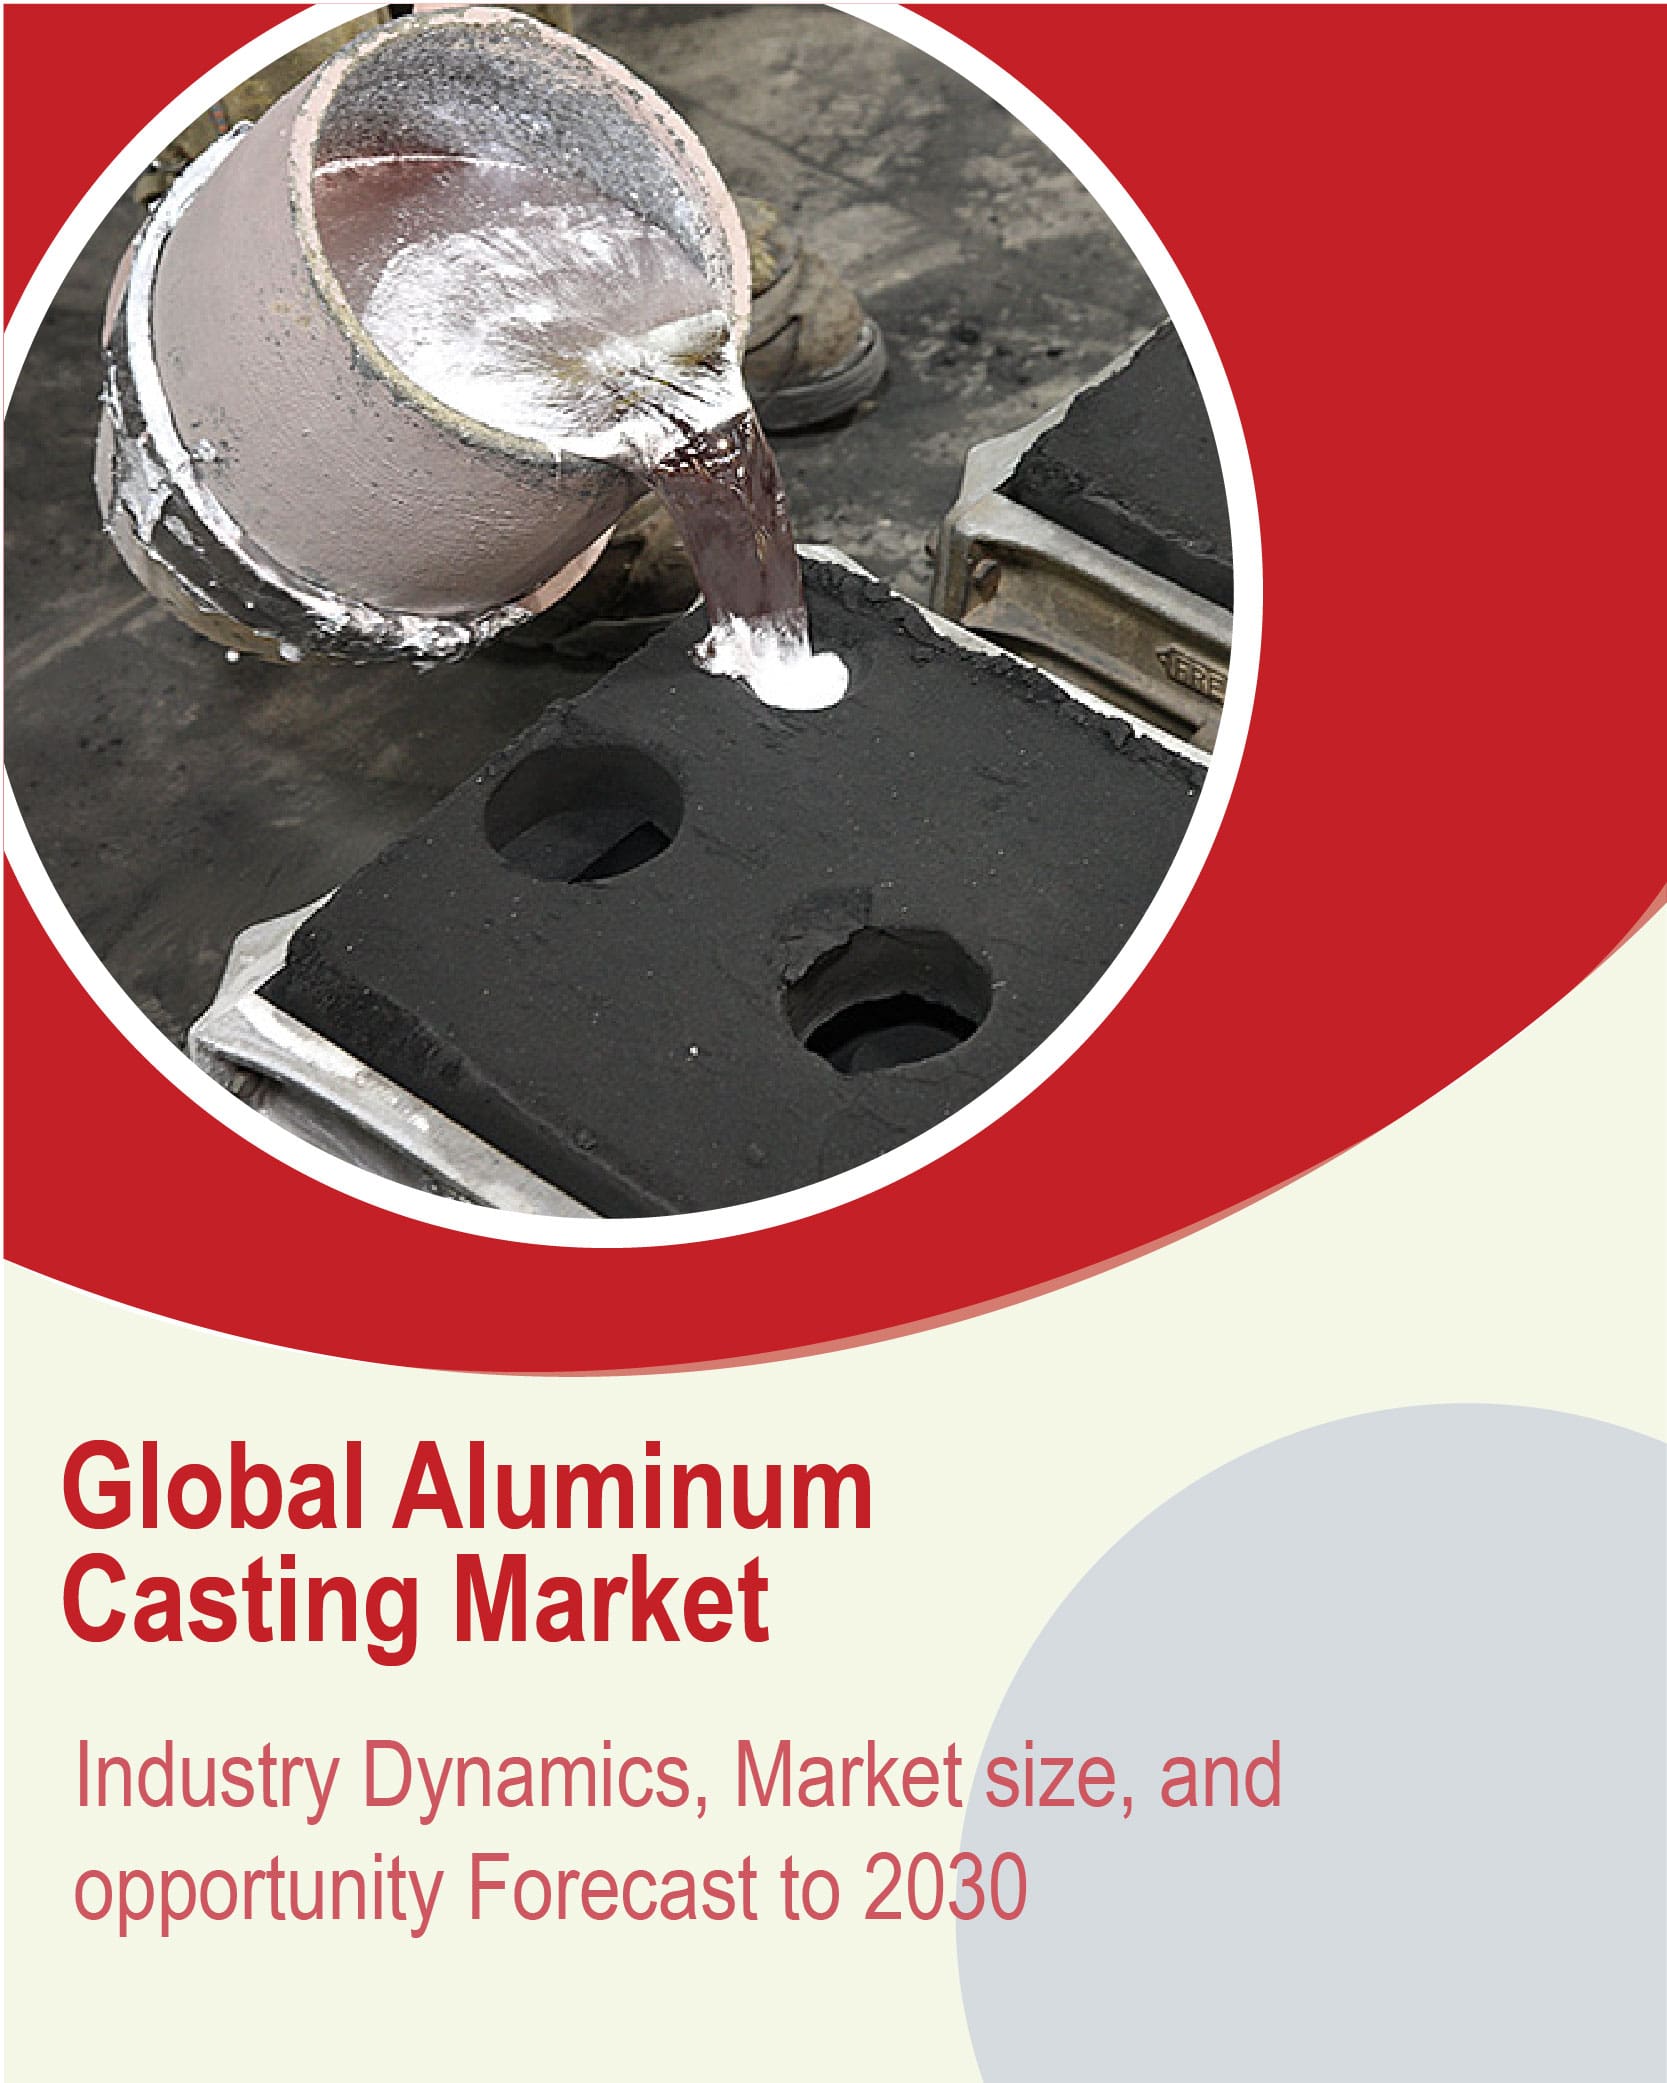 Aluminum Casting Market